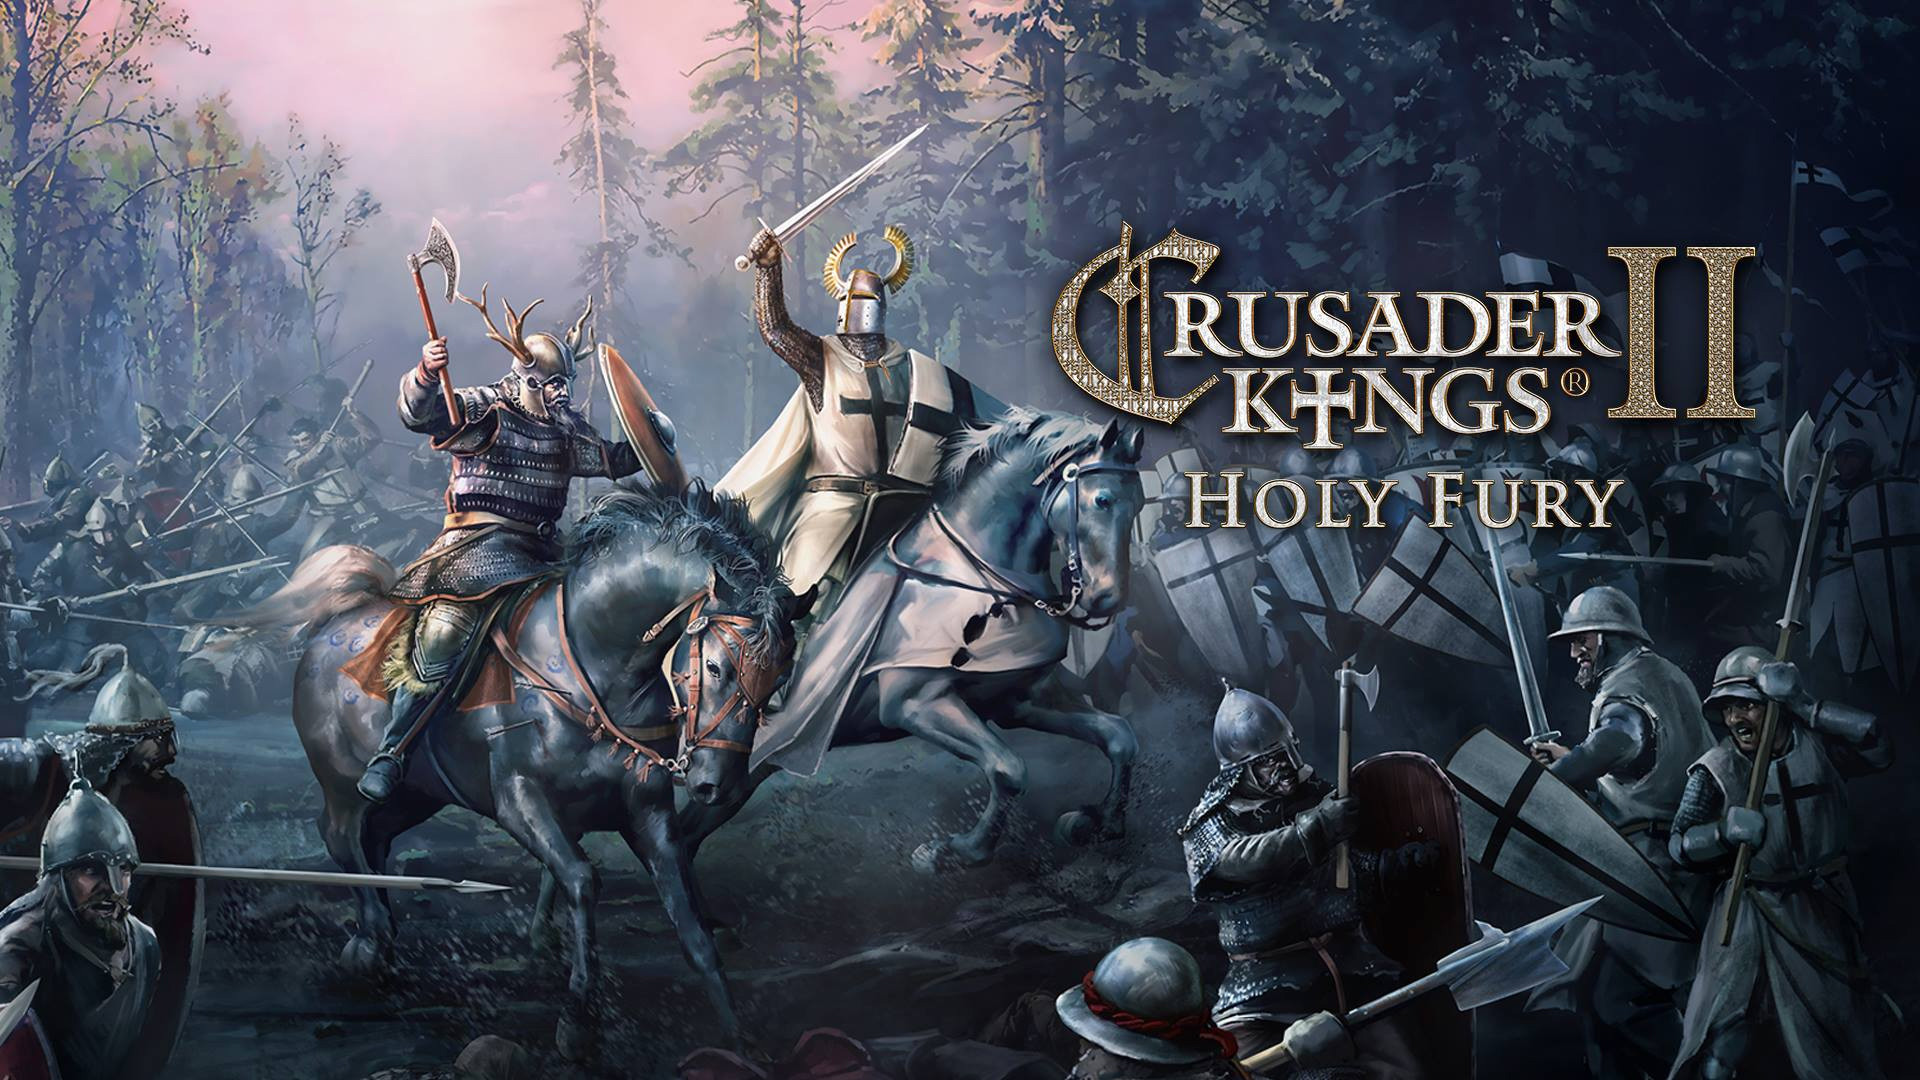 Holy Fury Wallpaper From Crusader Kings Ii 1920x1080